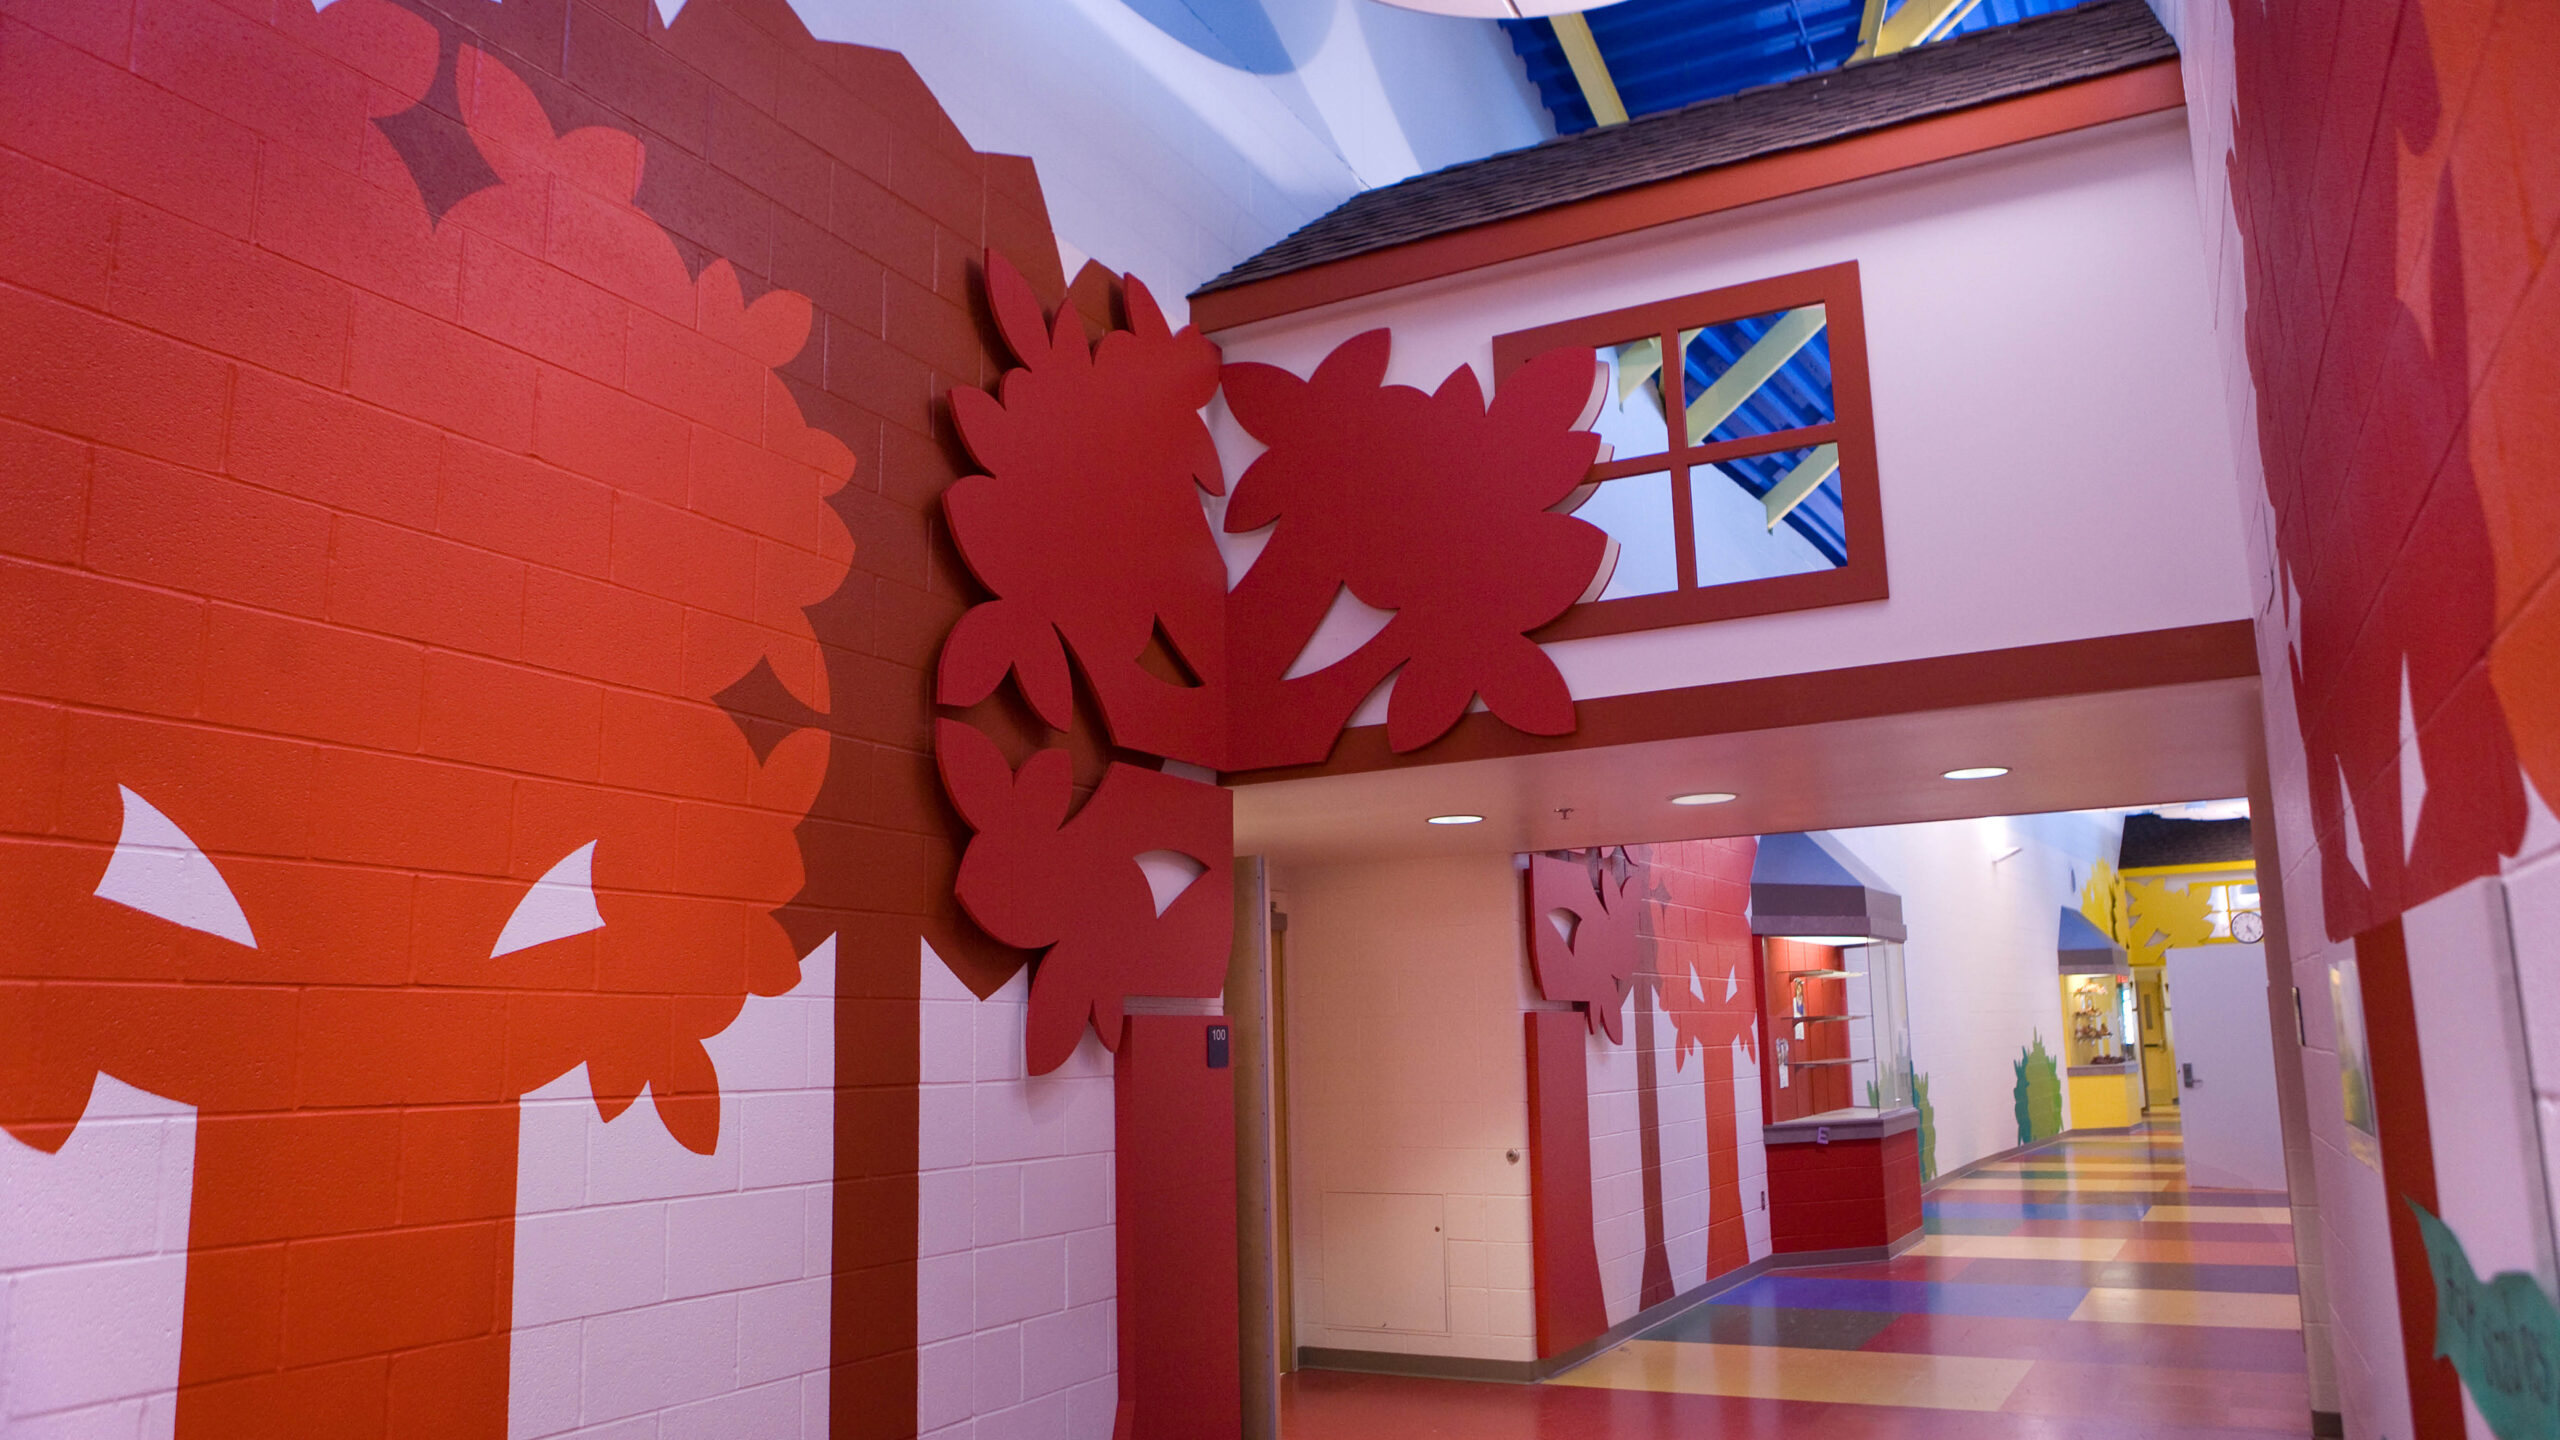 elementary school hallway with tree artwork